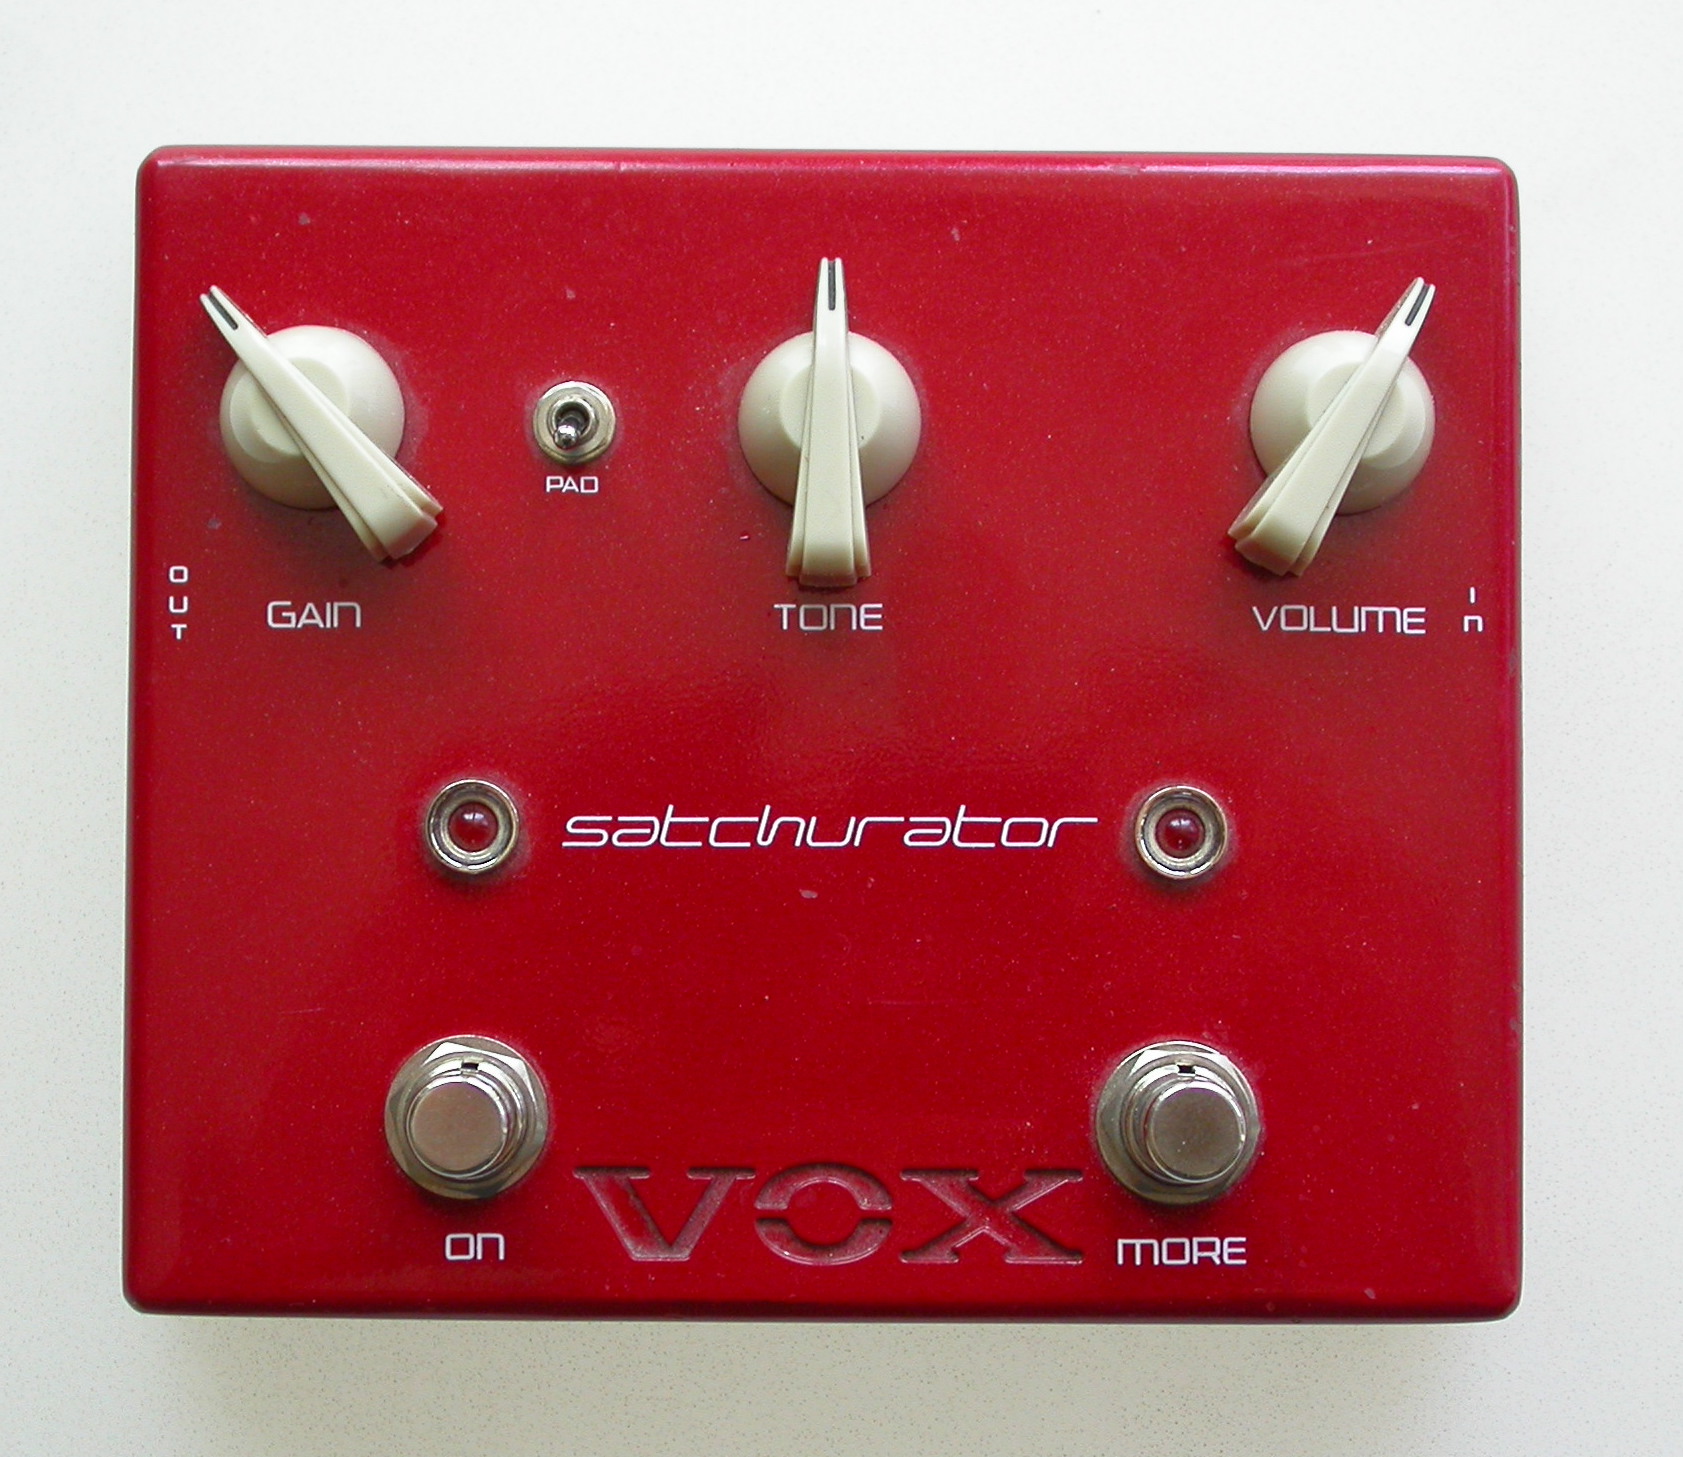 Vox - Satchurator - 2